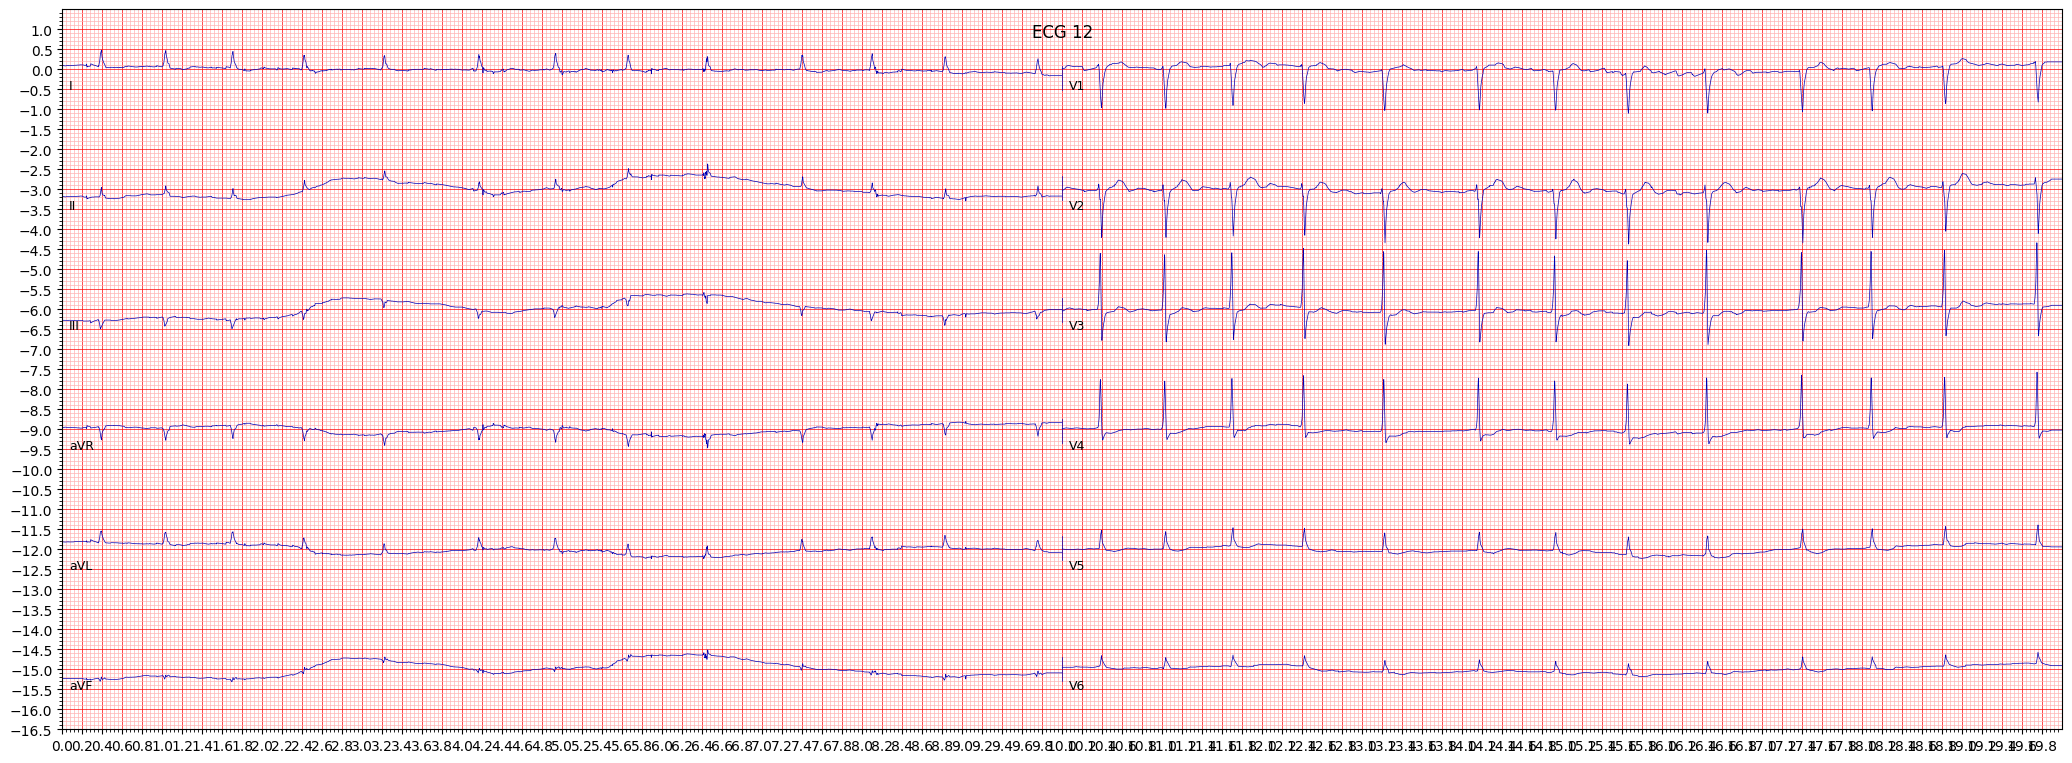 inferolateral myocardial infarction (ILMI) example 4203